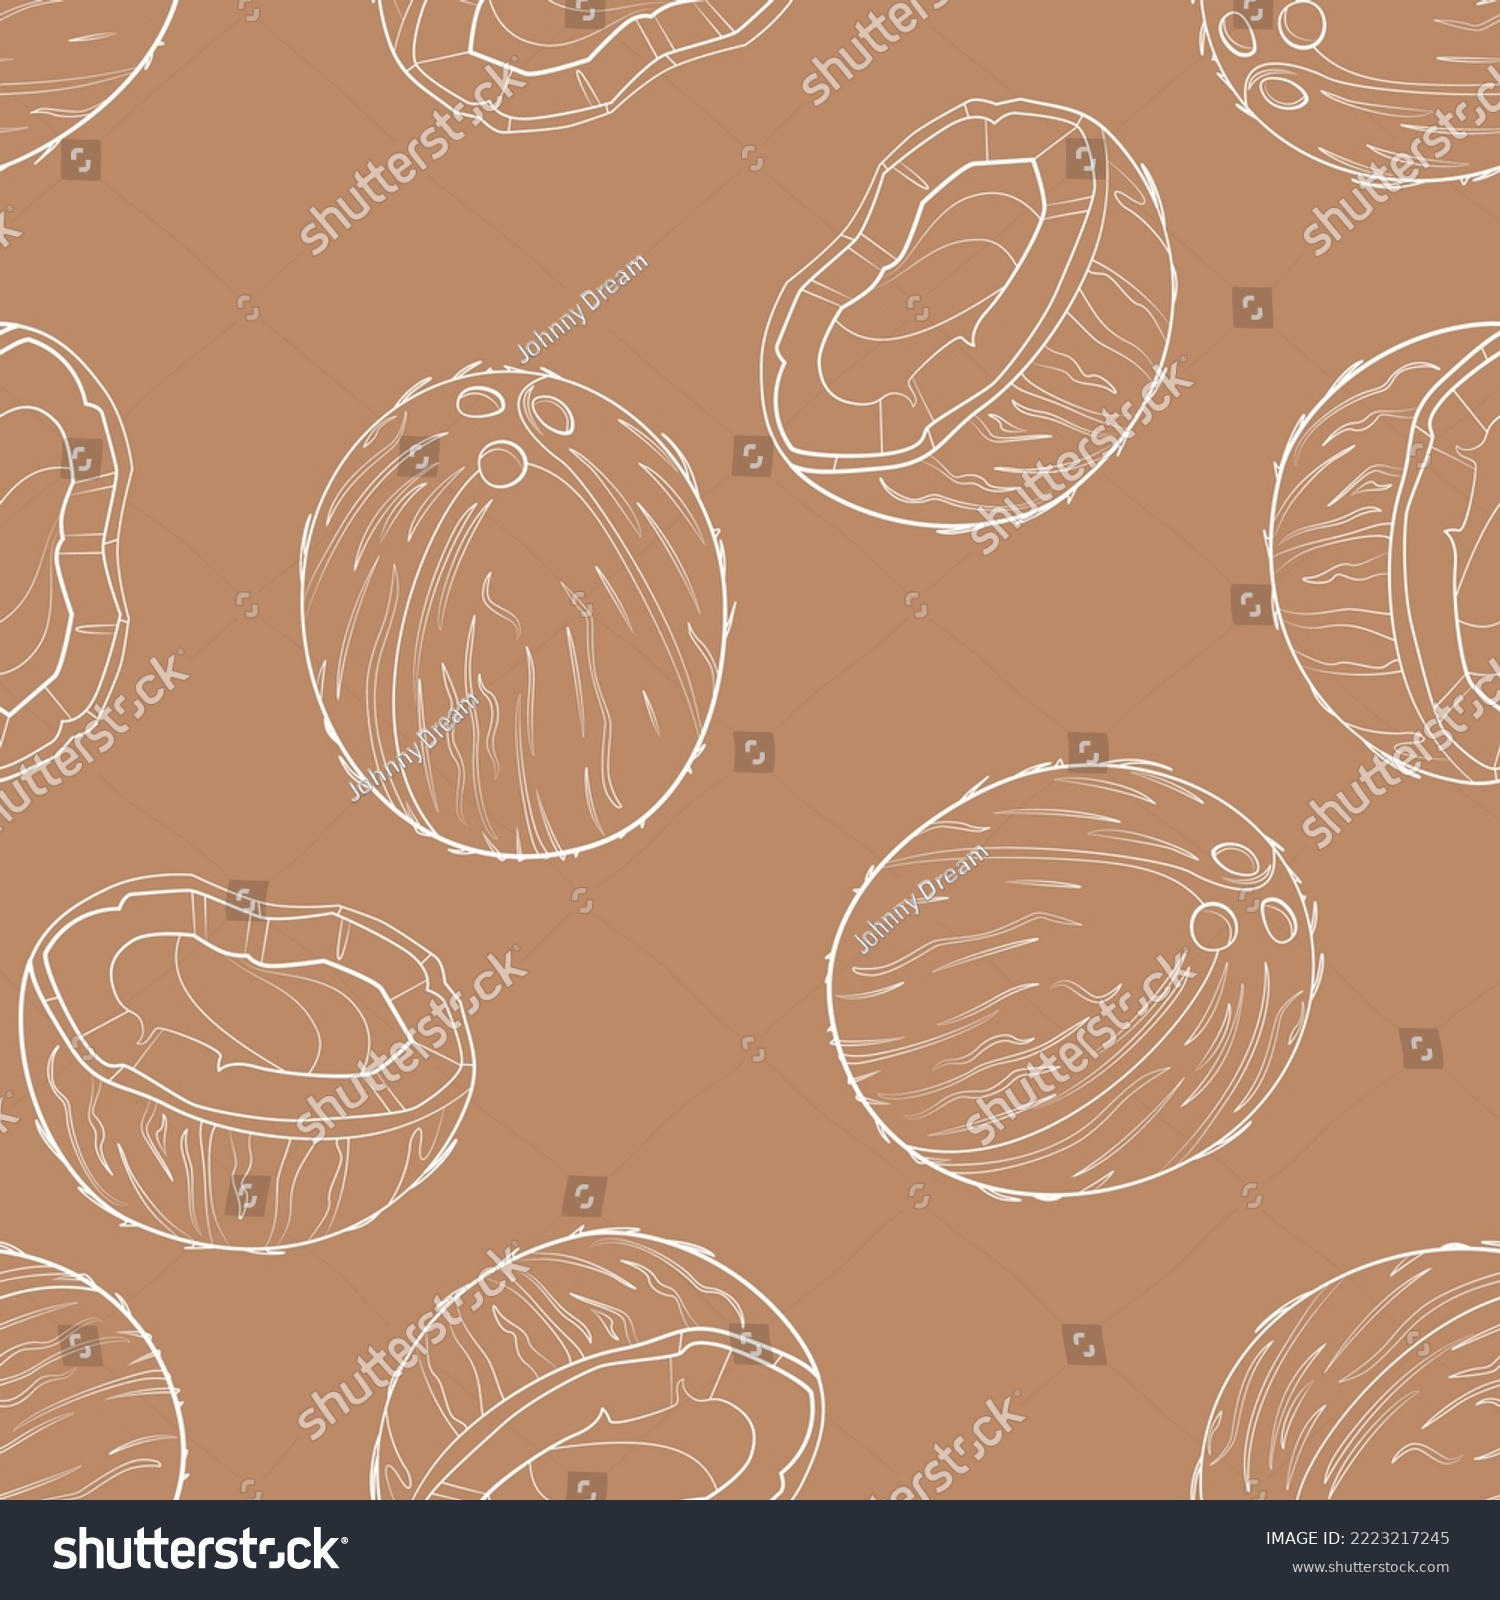 SVG of Coconuts seamless pattern. Line art vector illustration. Healthy food background. svg